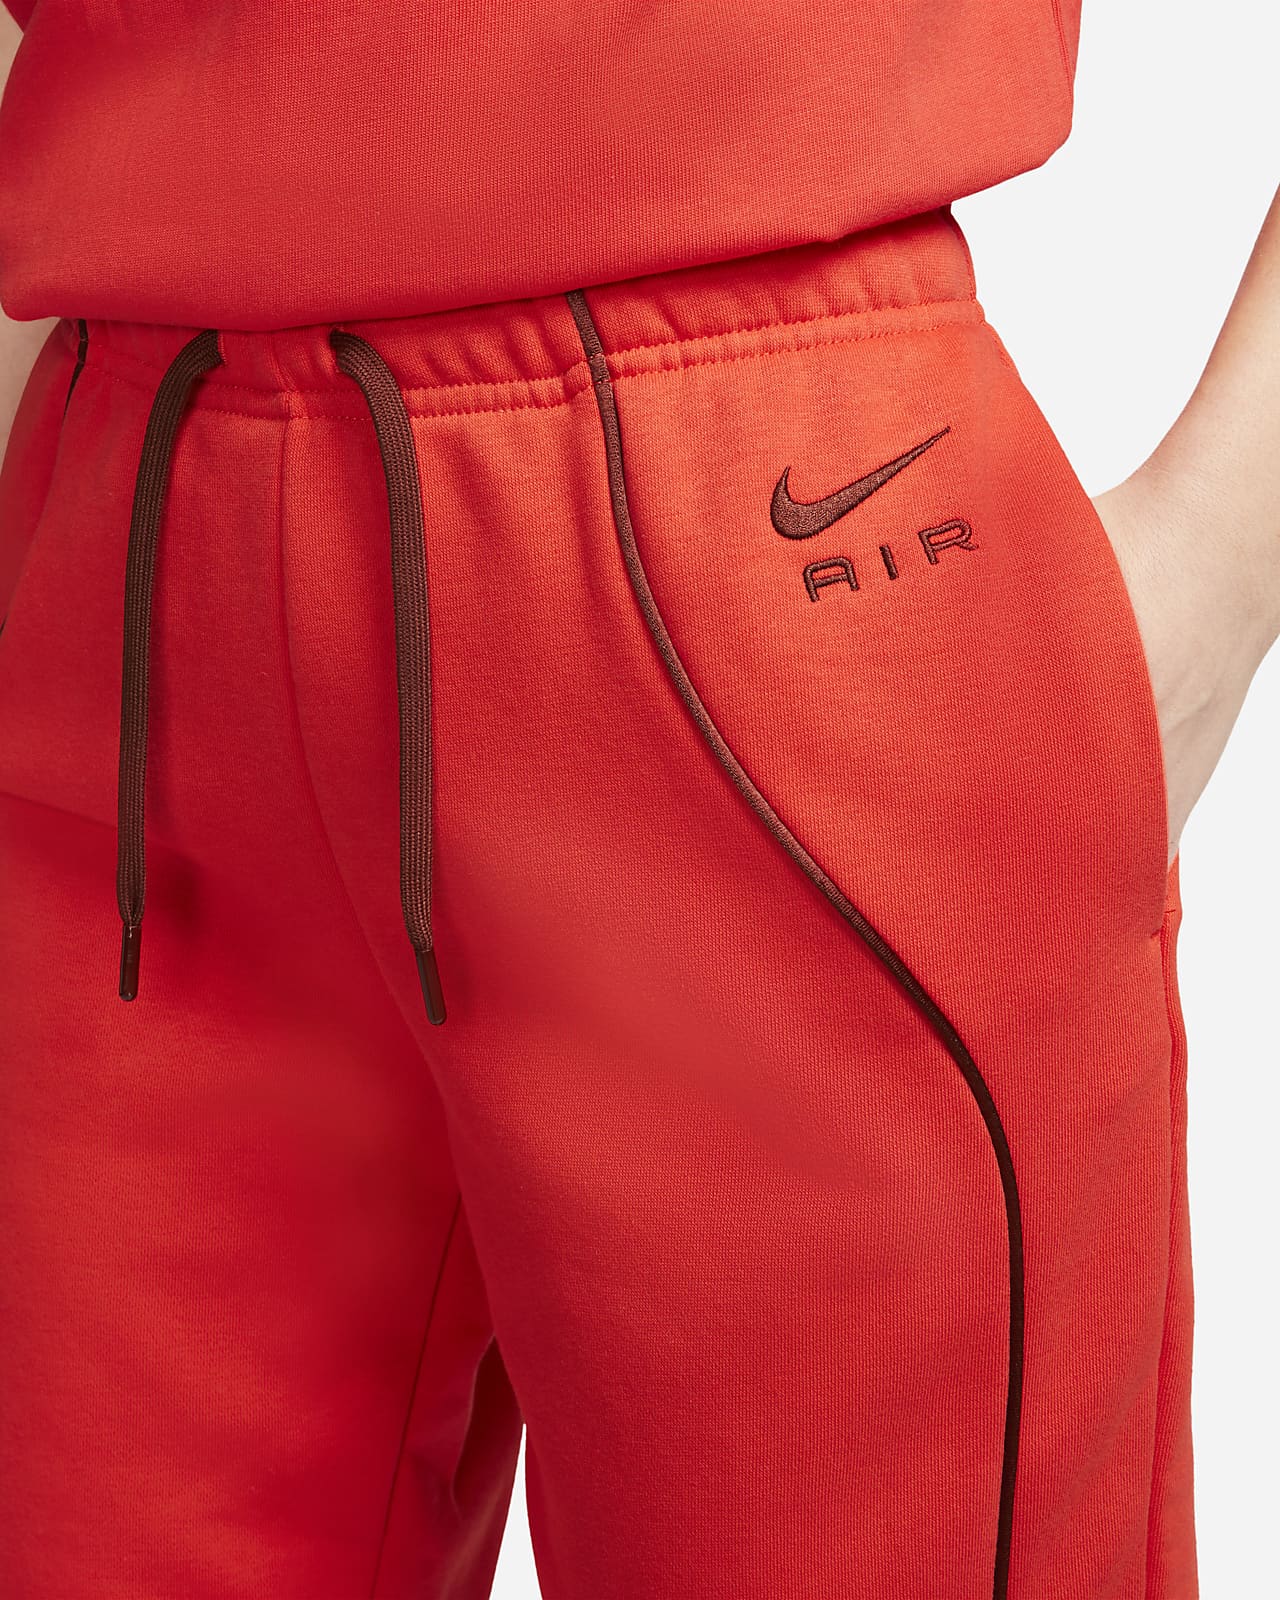 Joggers de tiro medio para mujer Nike Sportswear Tech Fleece